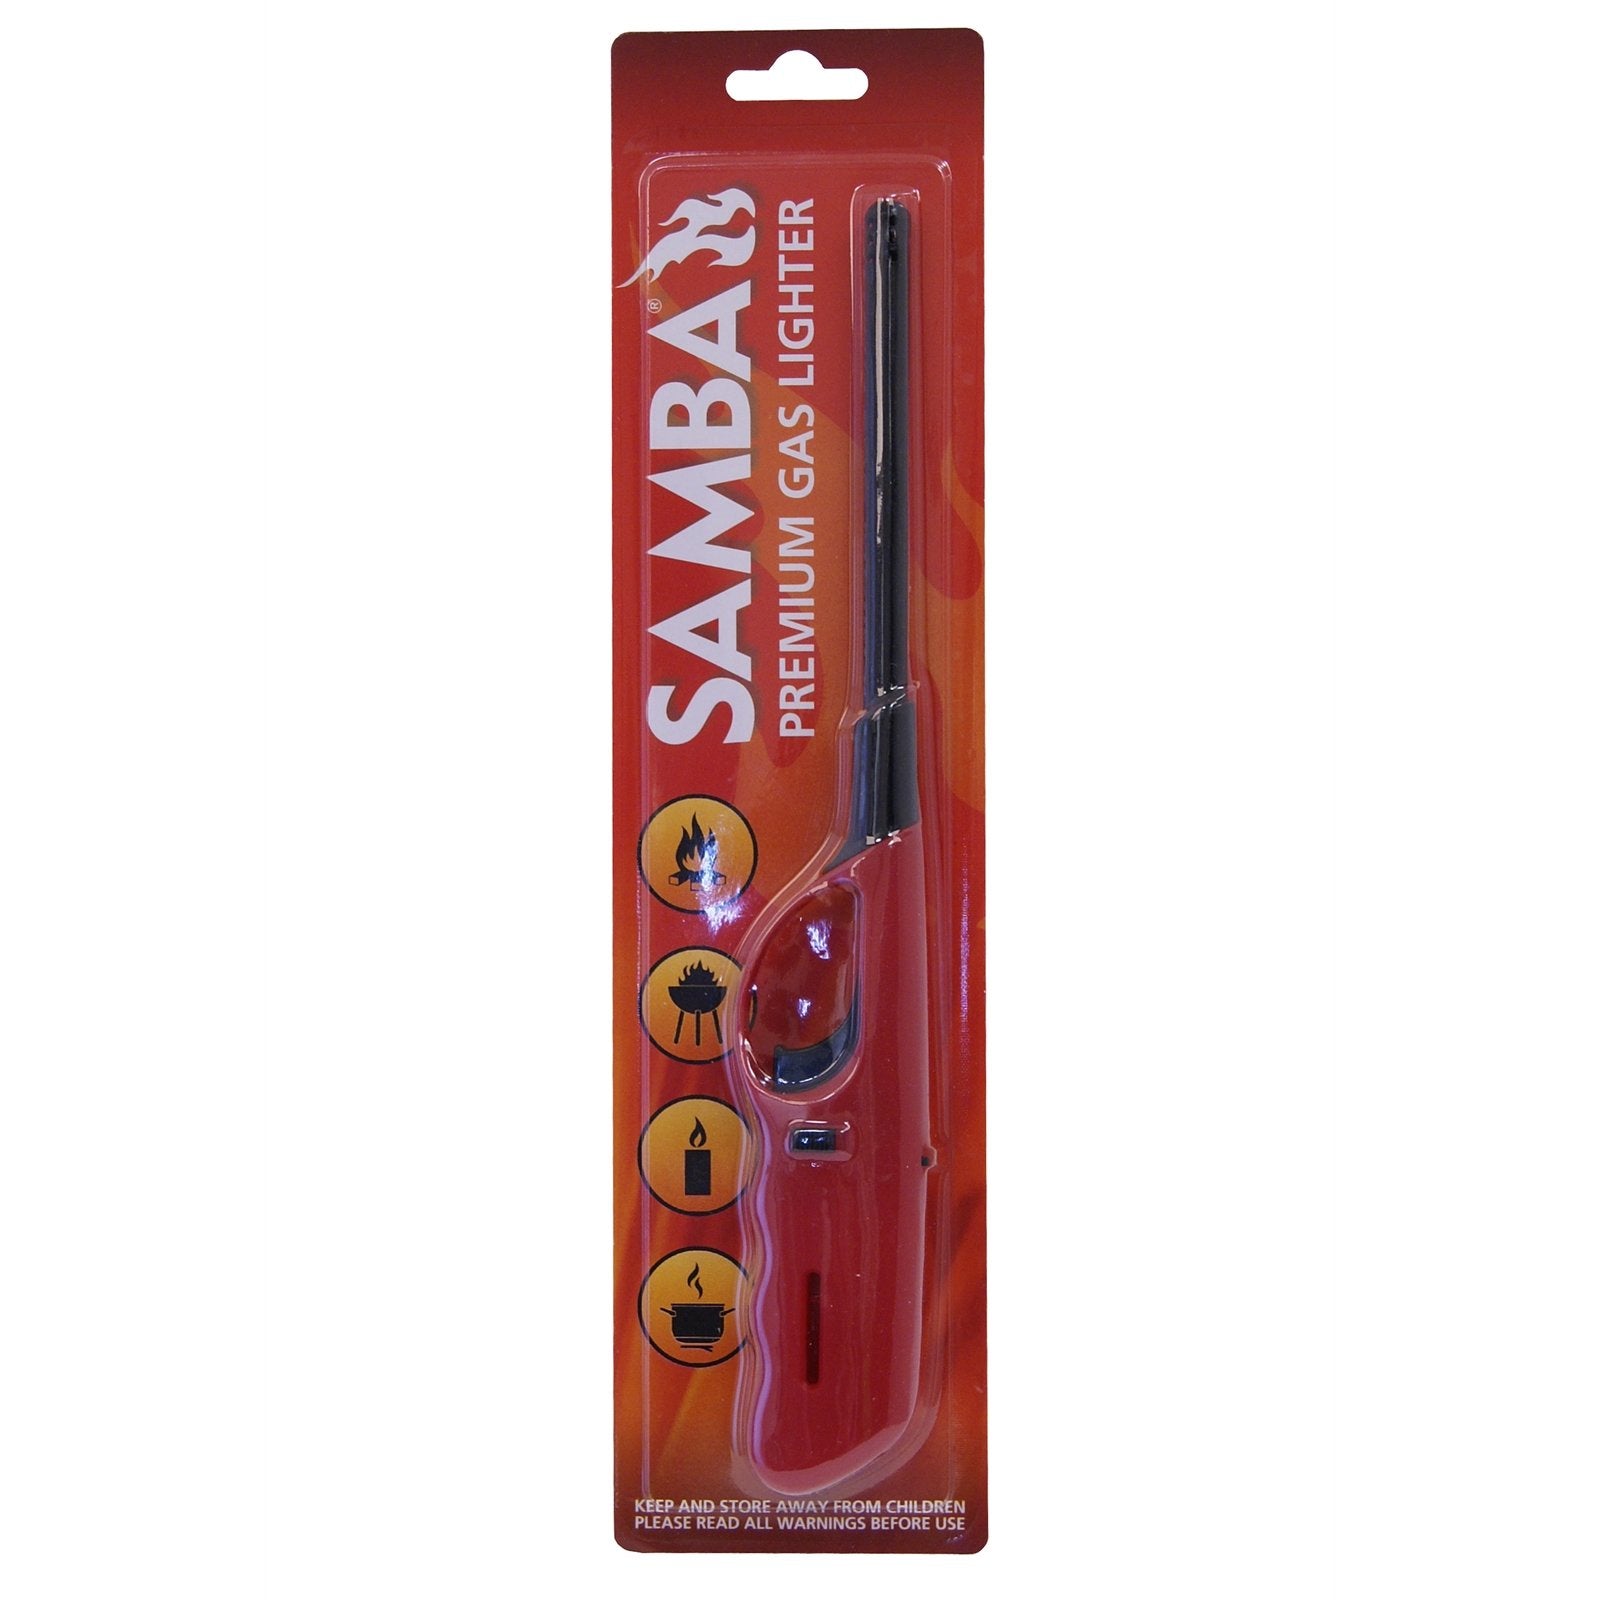 Samba Premium Gas Lighter